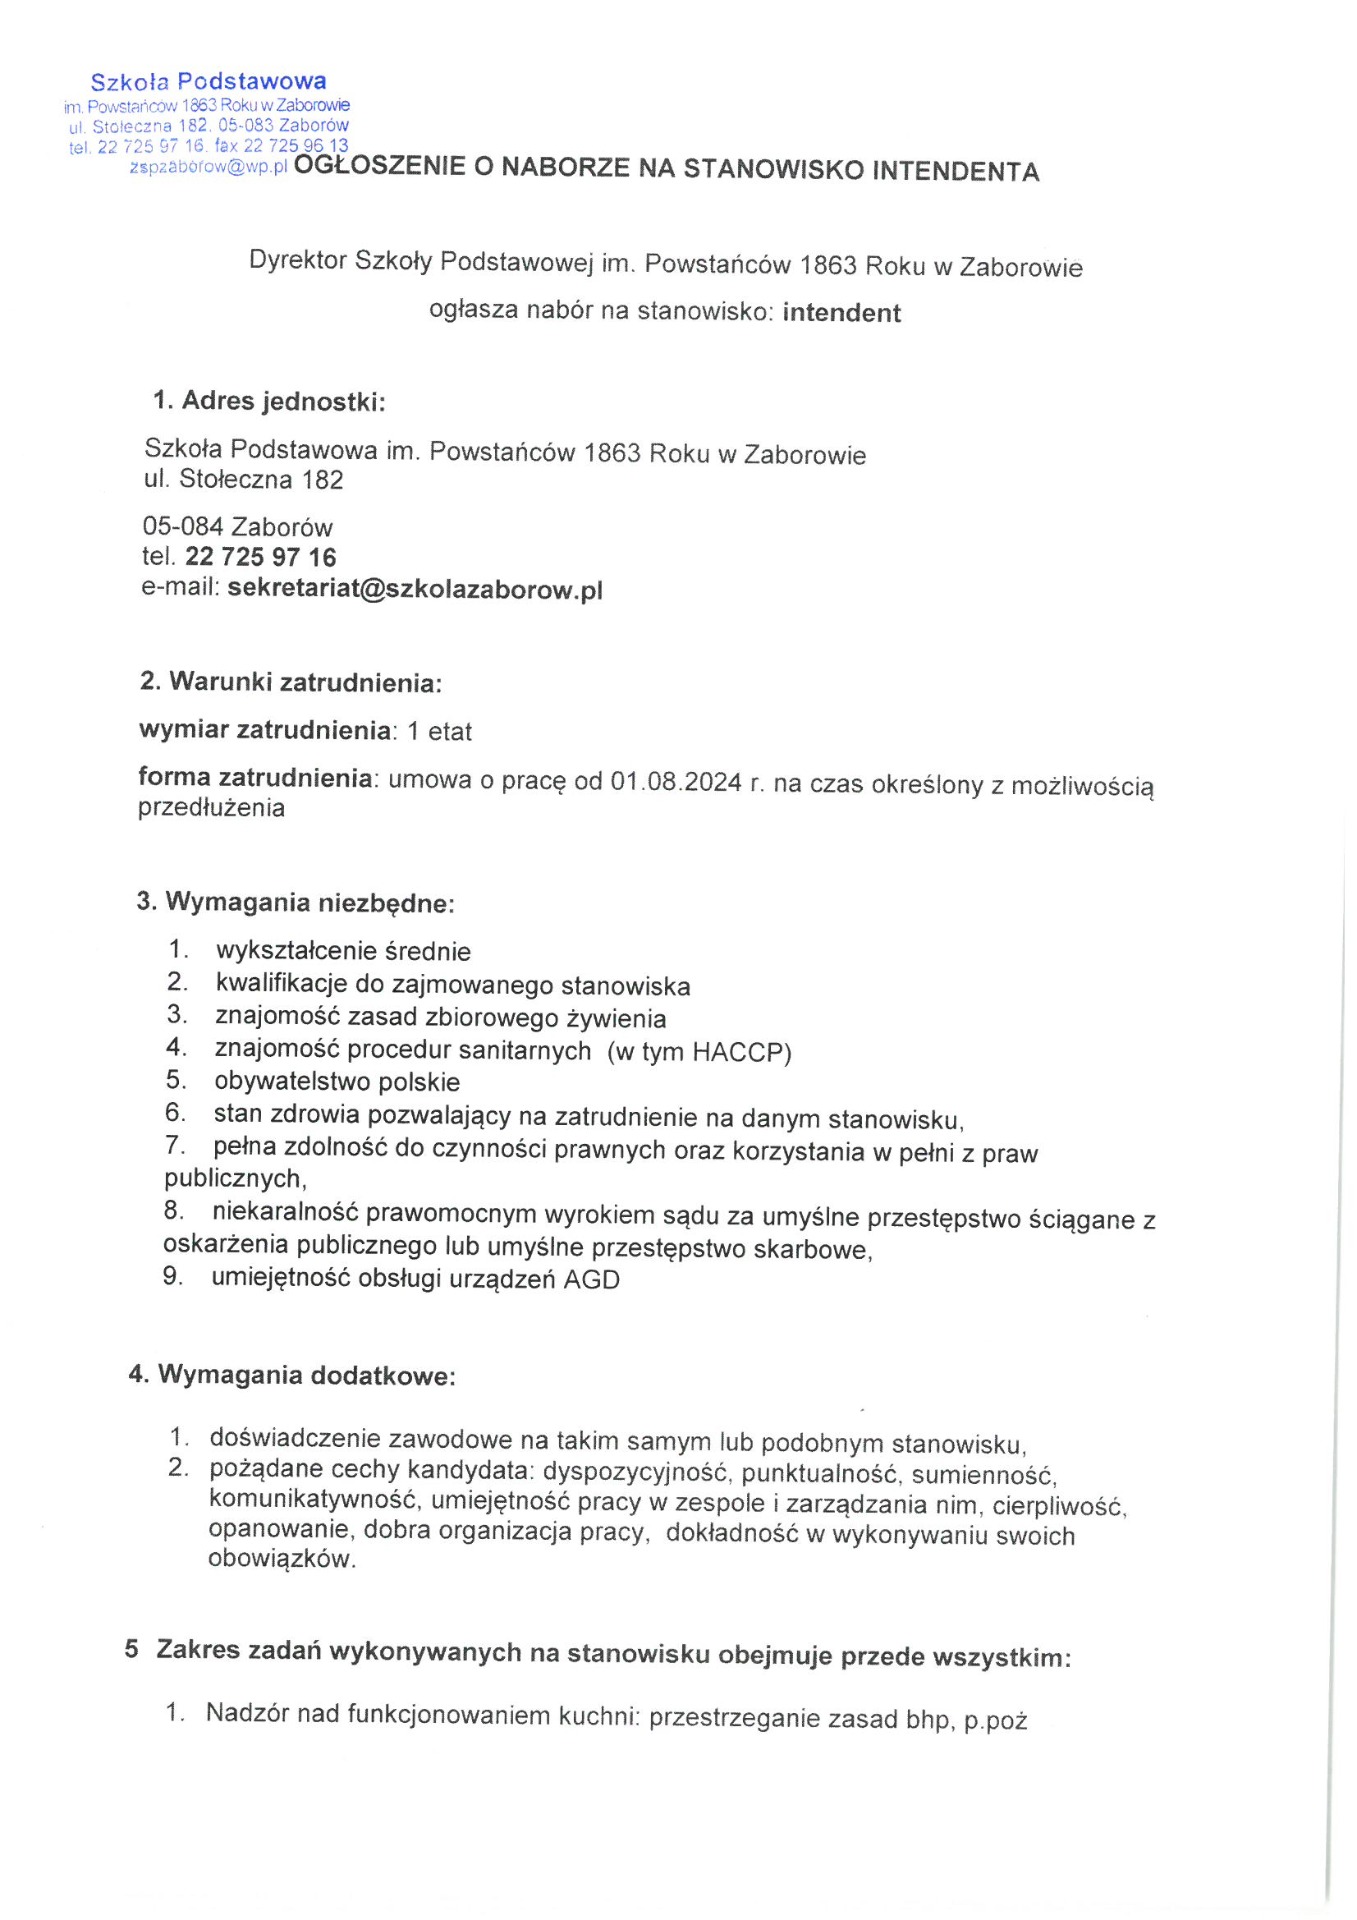 Oferta pracy na stanowisku intendent - Obrazek 1